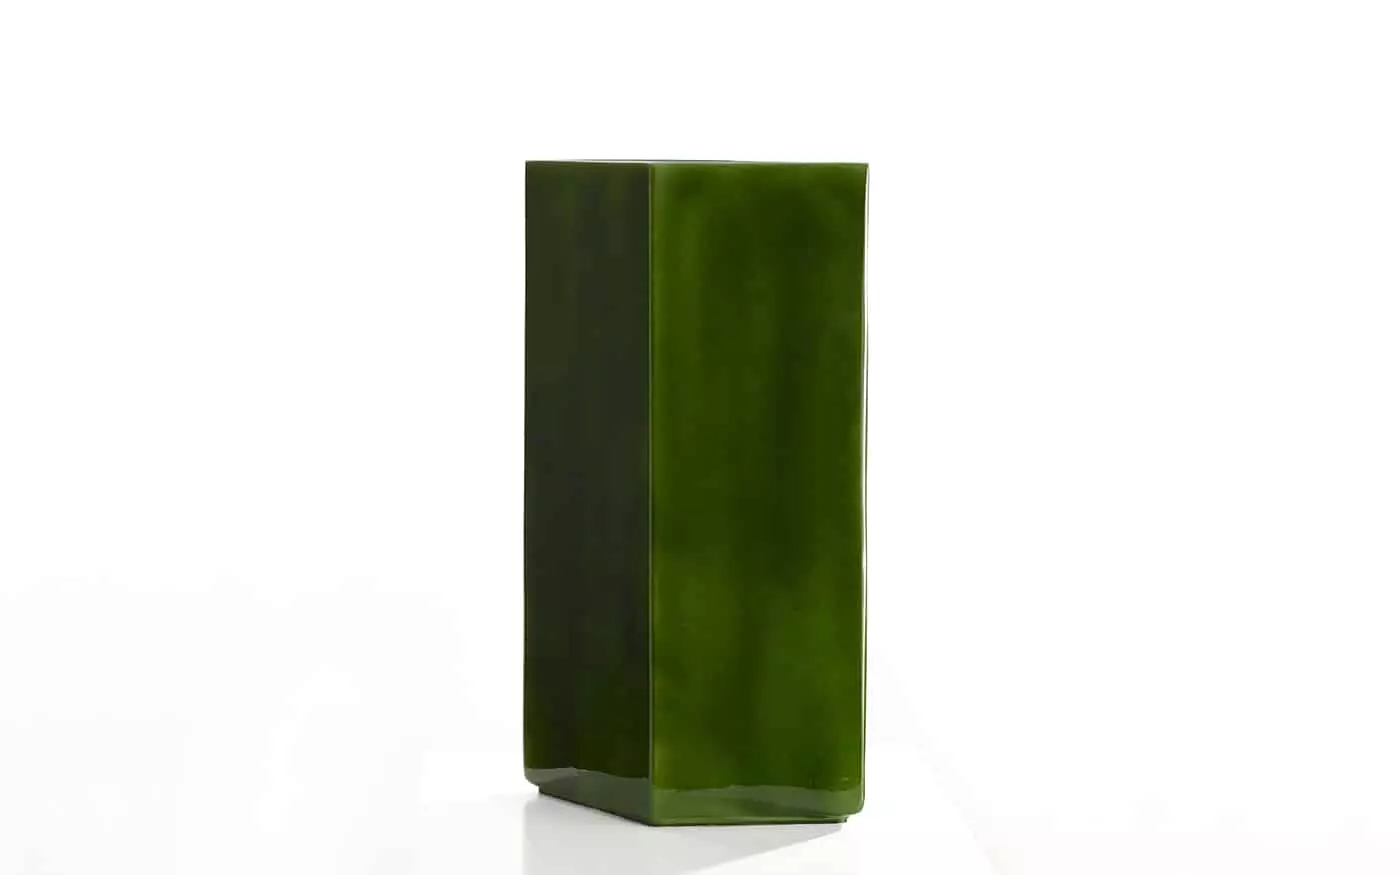 Vase Losange 84 green - Ronan & Erwan Bouroullec - Console - Galerie kreo